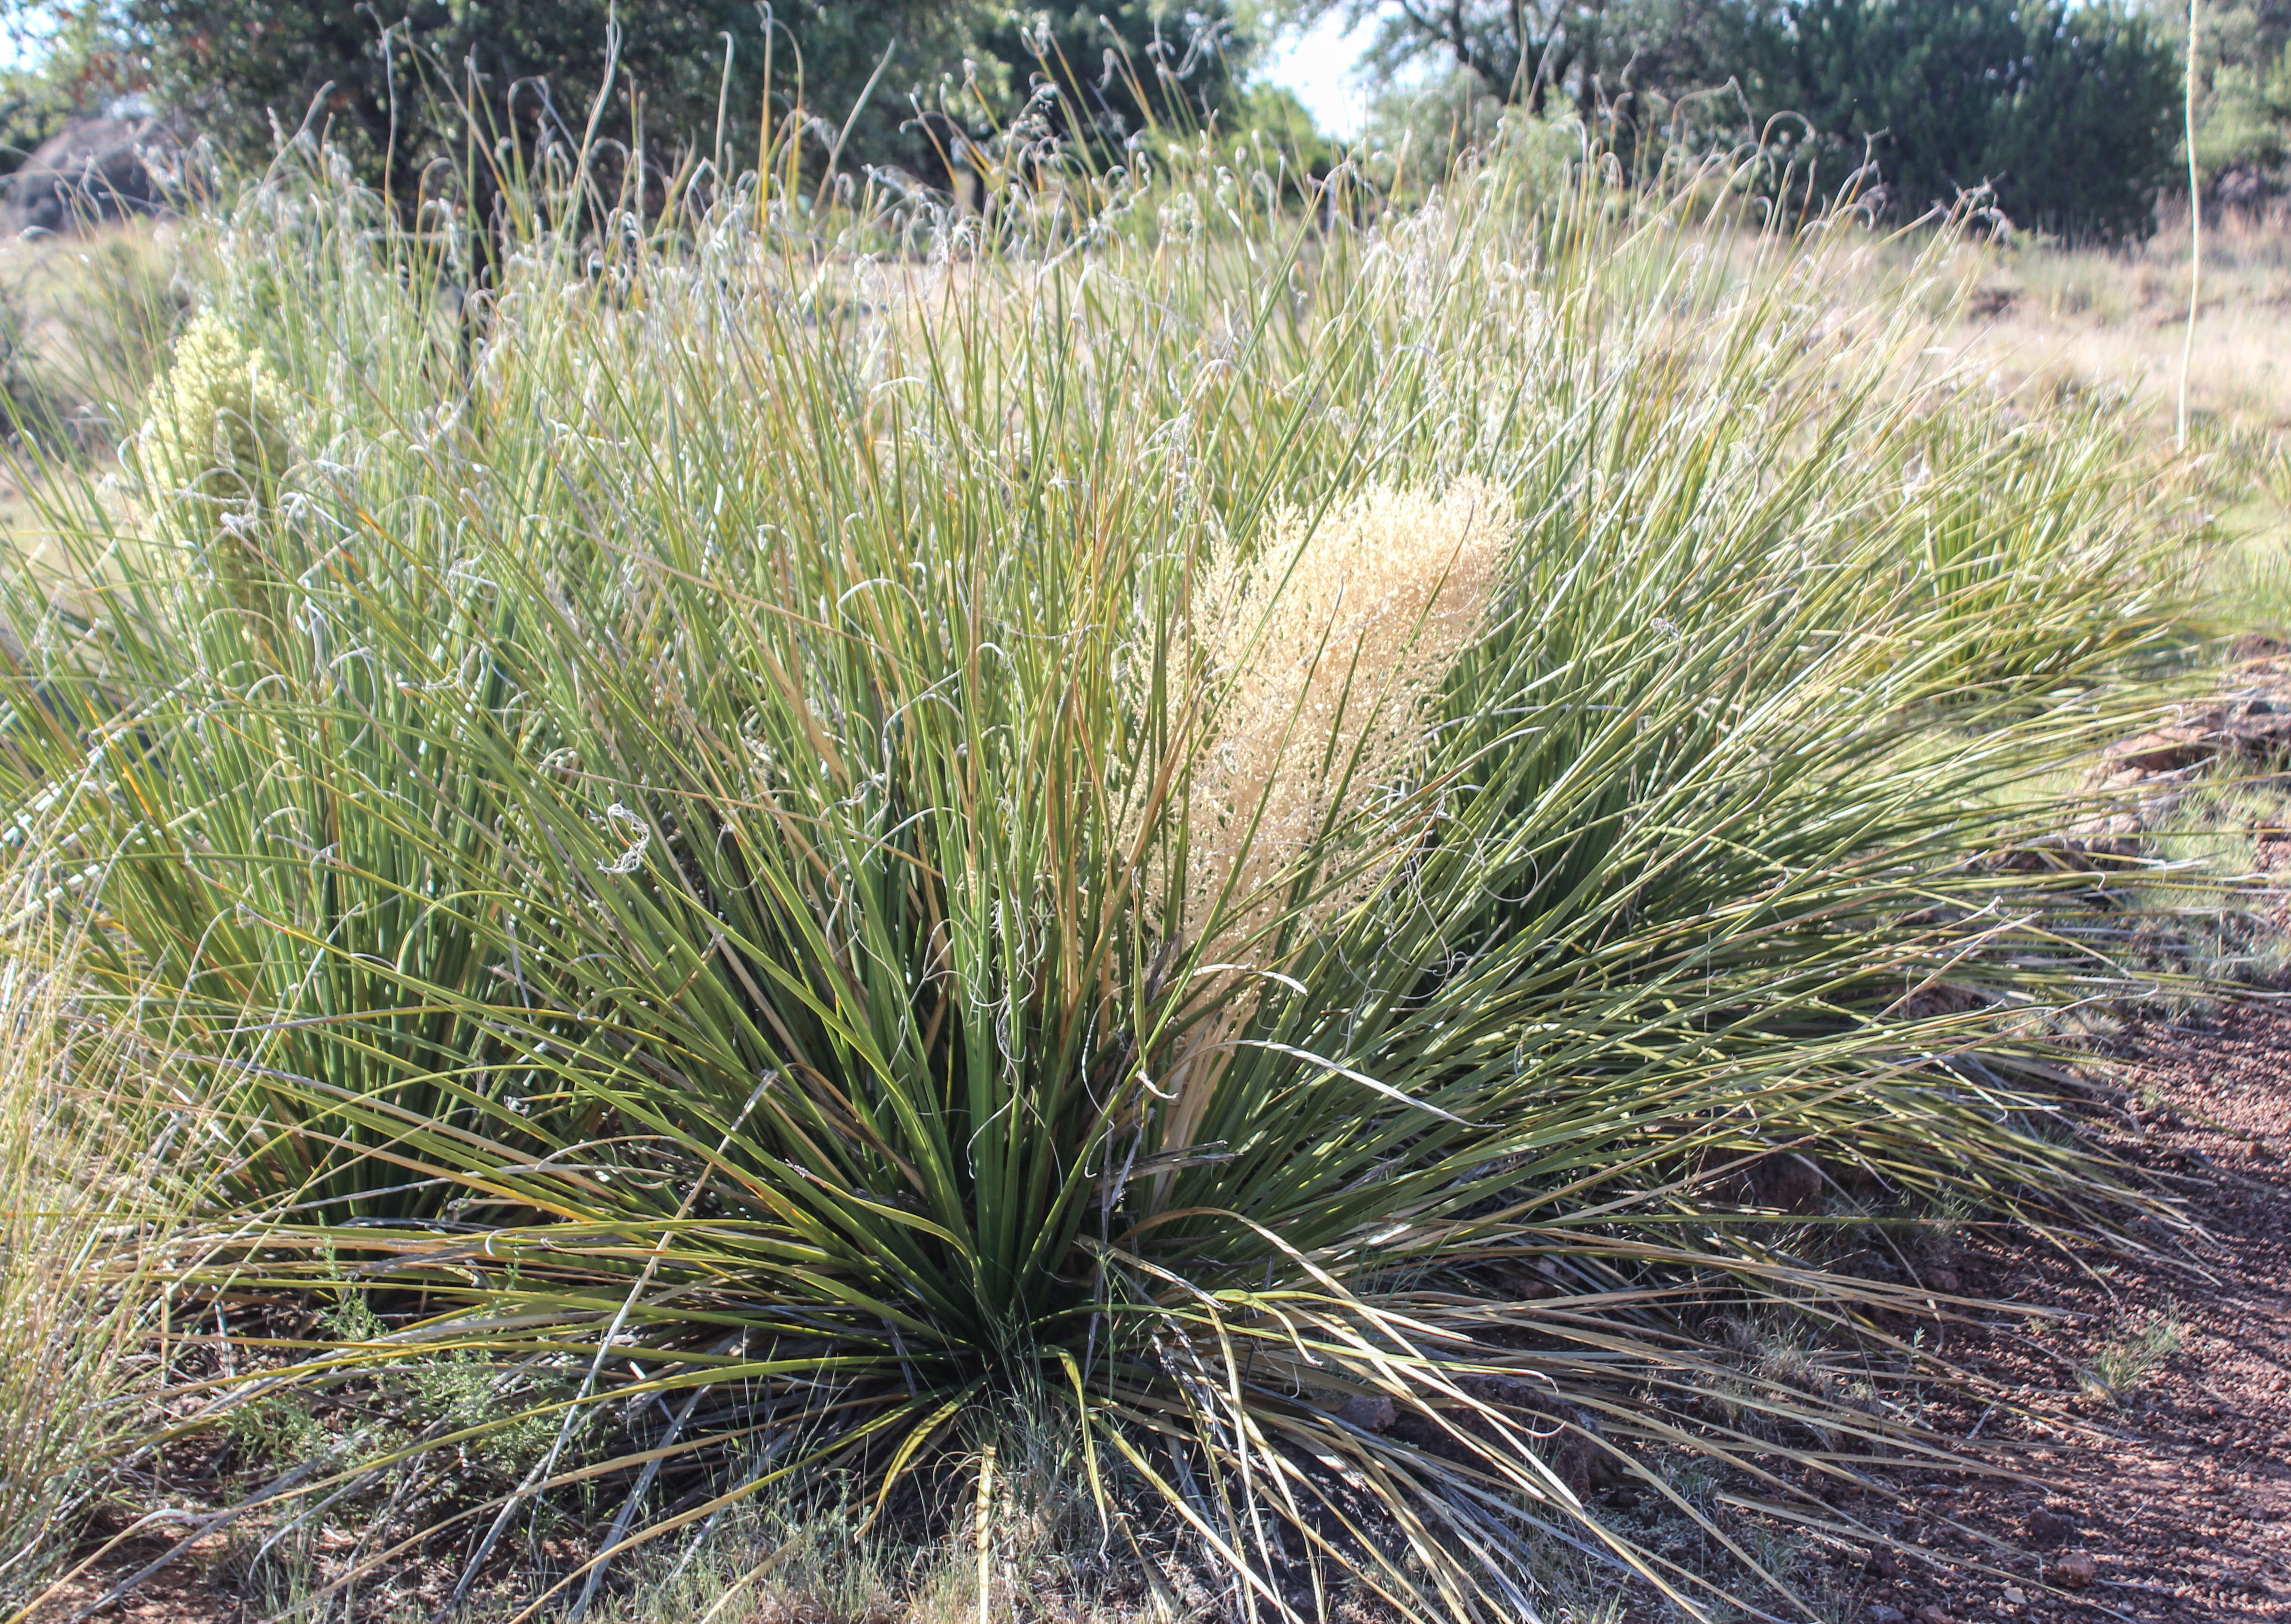 Image of beargrass